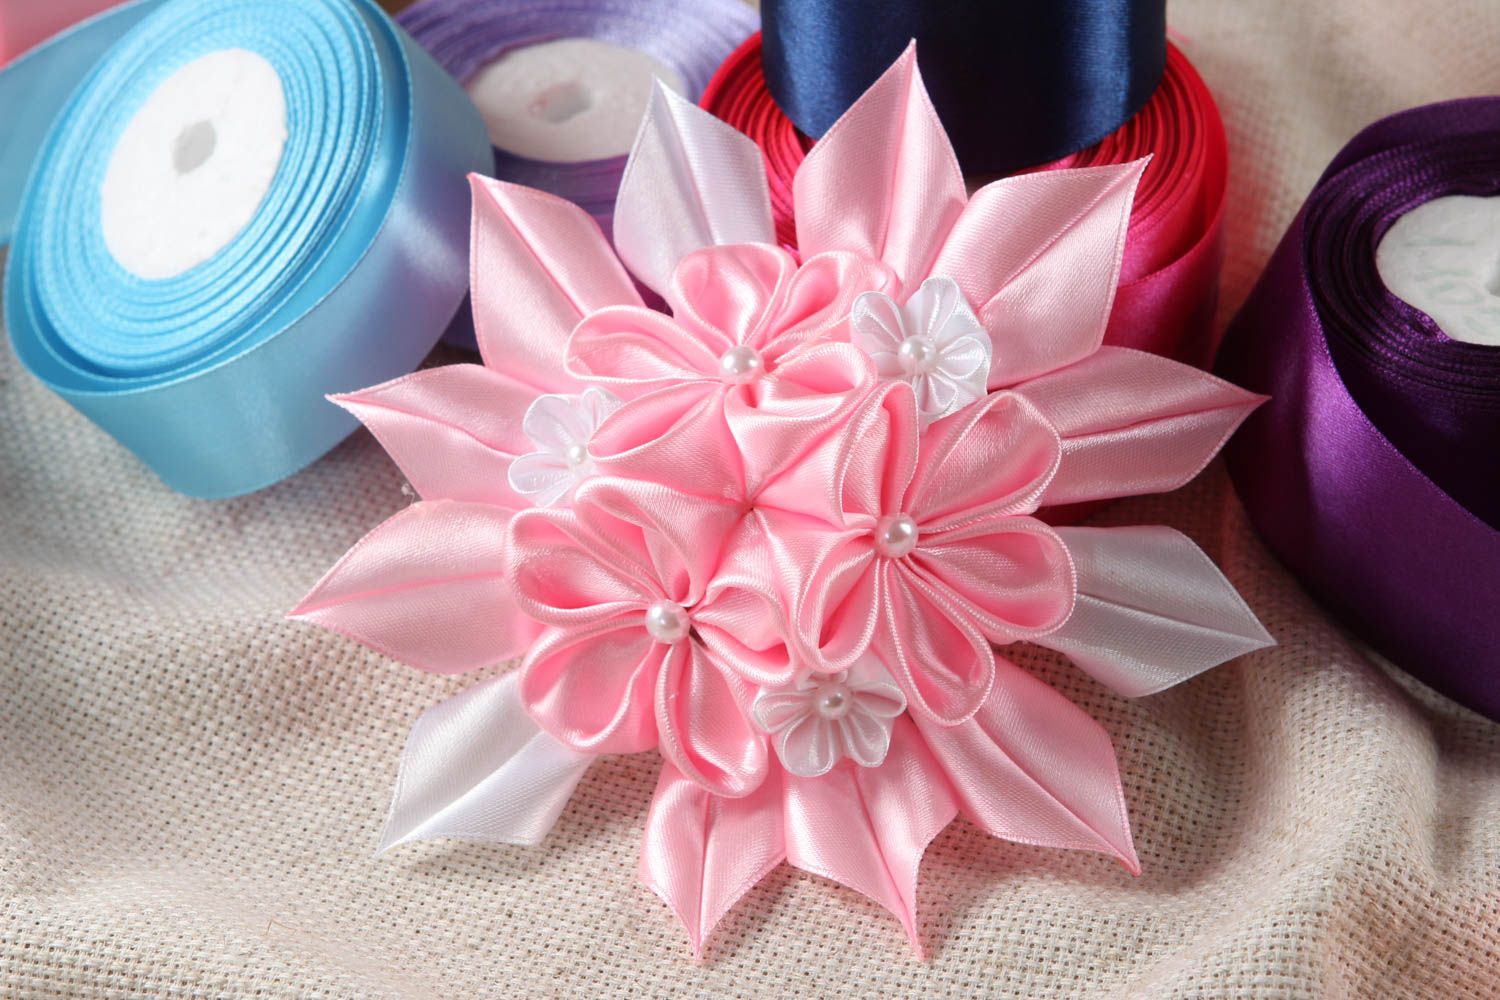 Flower hair clips unusual hair accessory handmade hair clip gift ideas photo 1